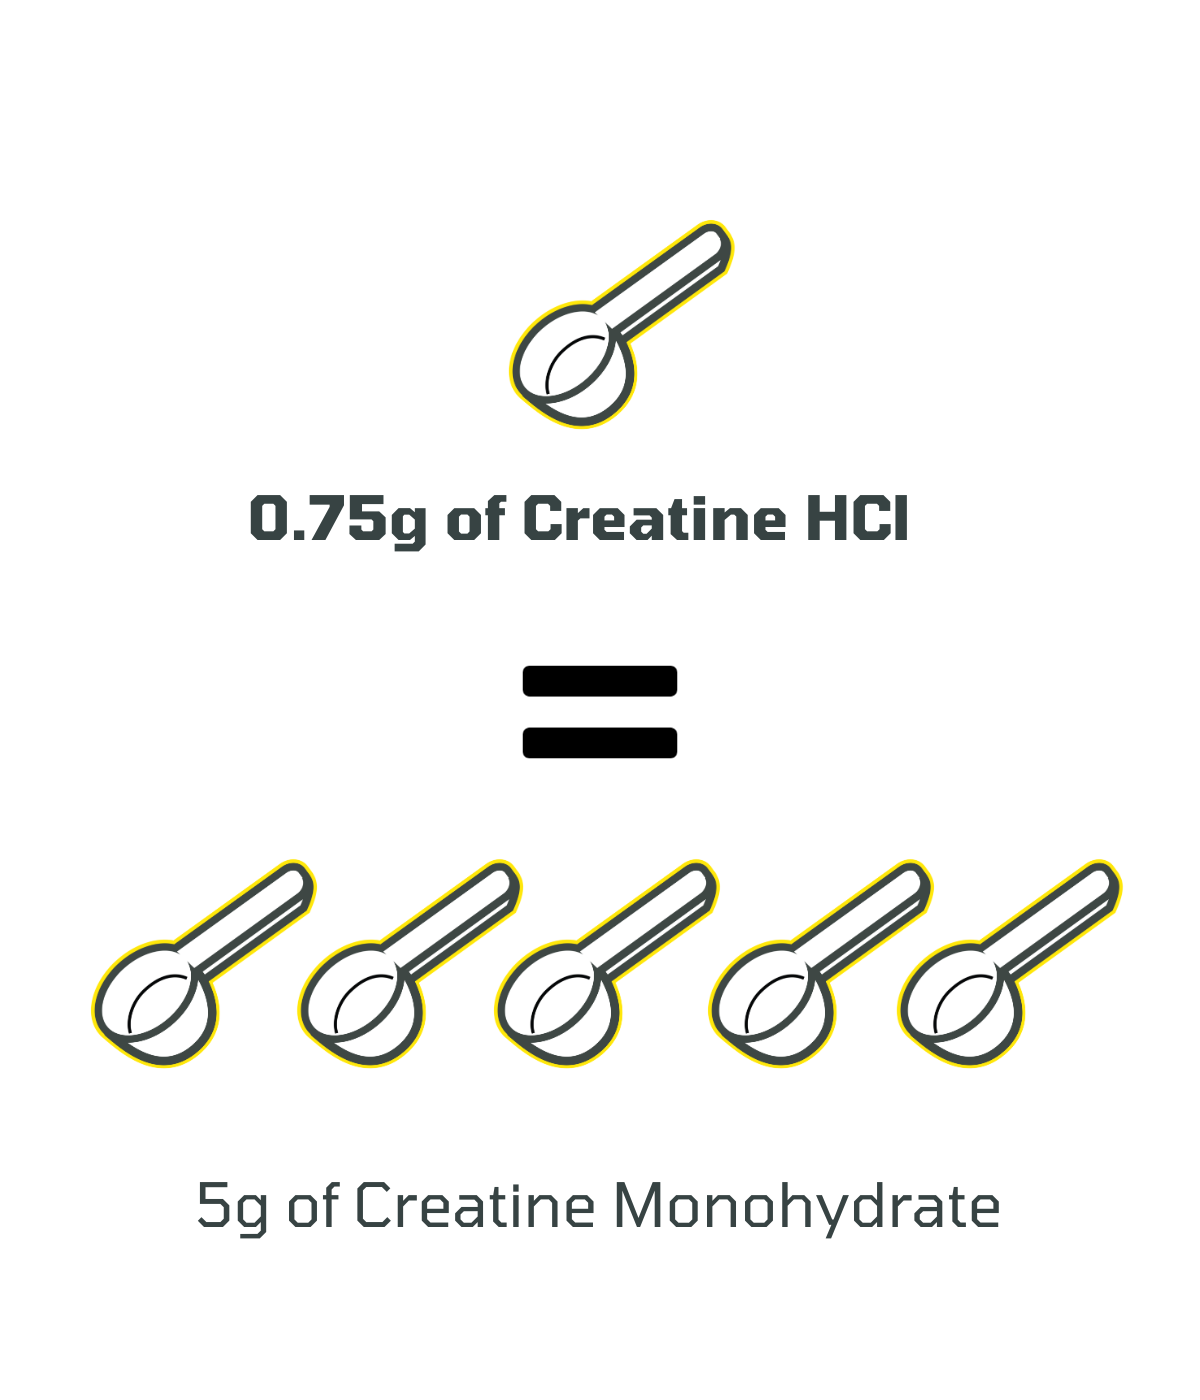 Creatine HCl vs. Creatine Monohydrate